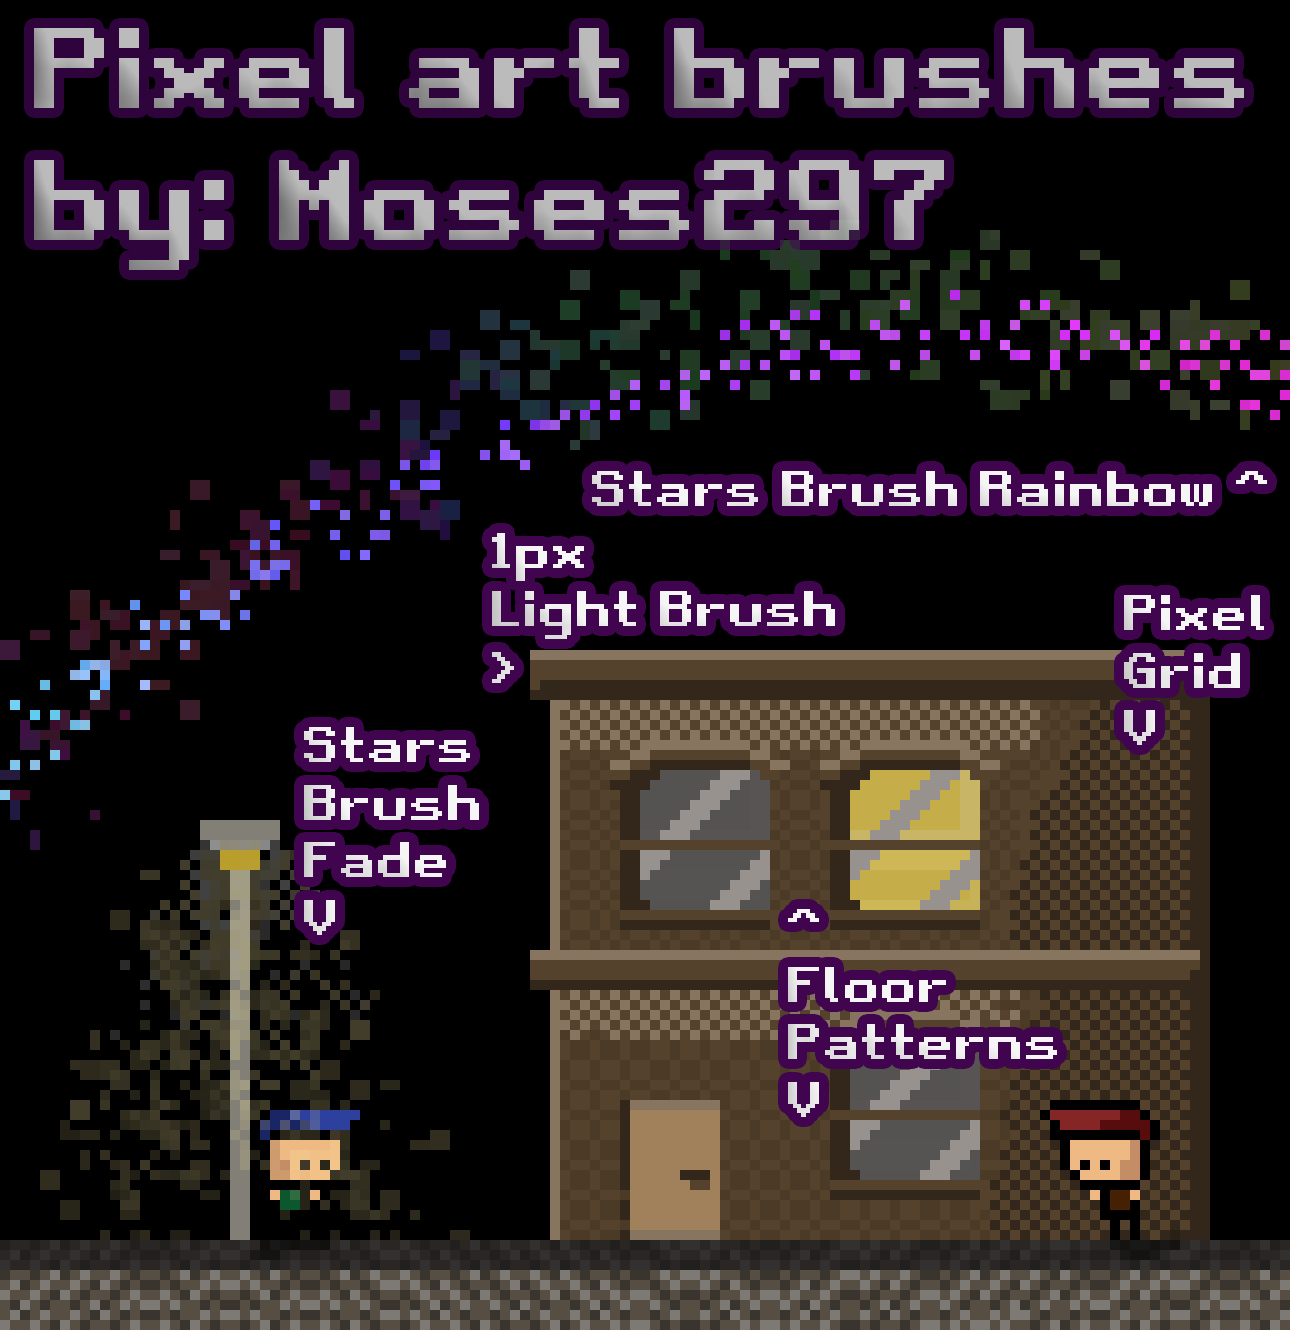 pixel brush procreate free download